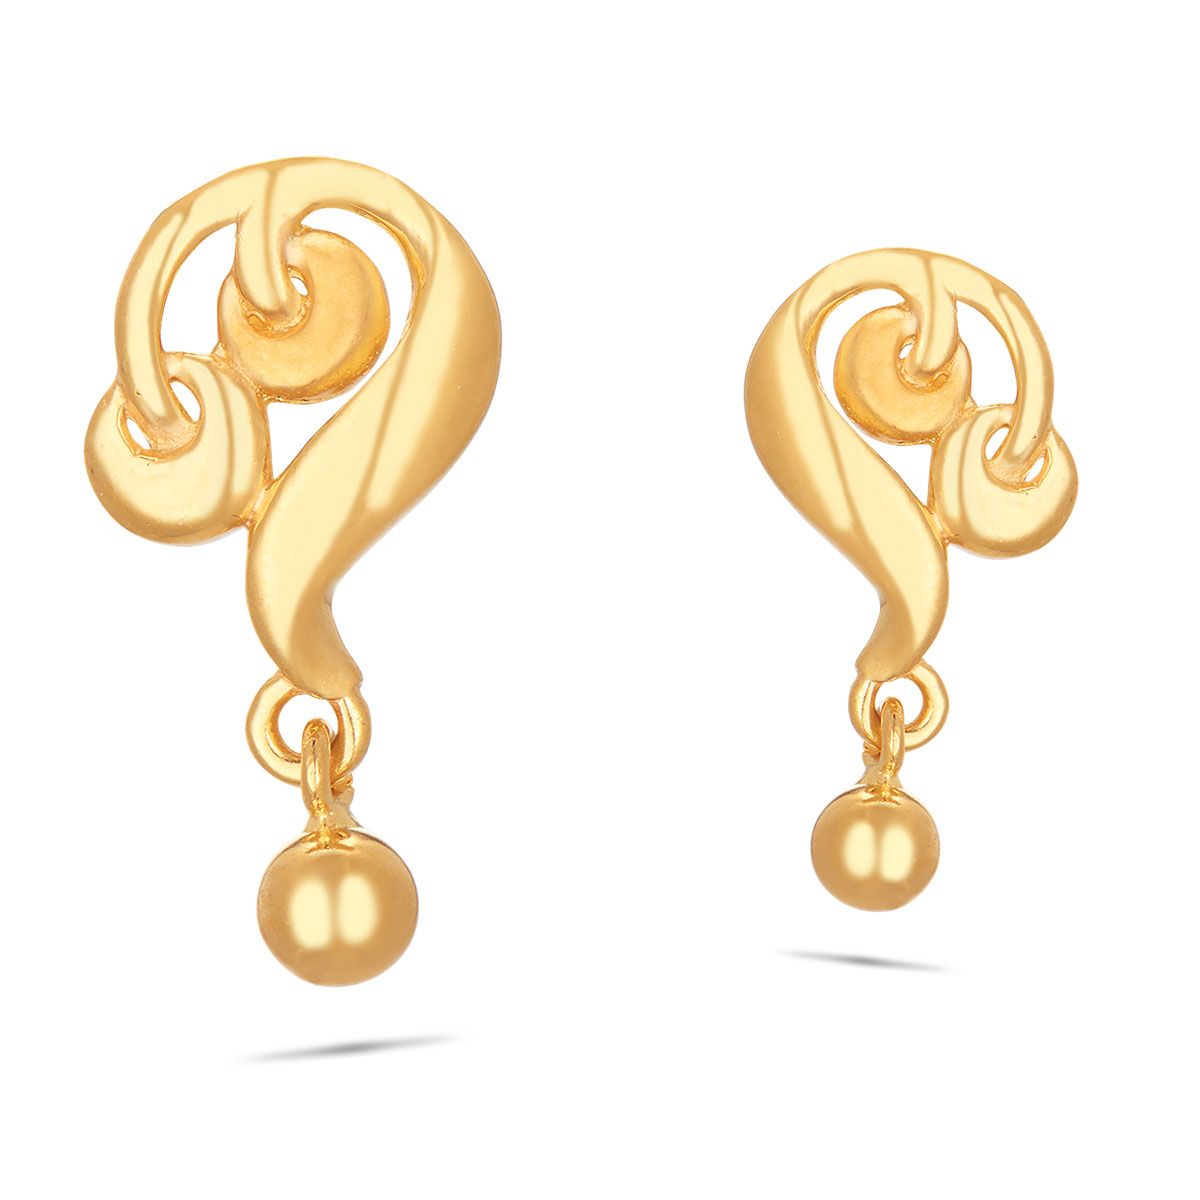 Yellow Chimes Earrings  Buy Yellow Chimes GoldToned Of 2 Heart Shaped  Long Chain Drop Earrings Online  Nykaa Fashion